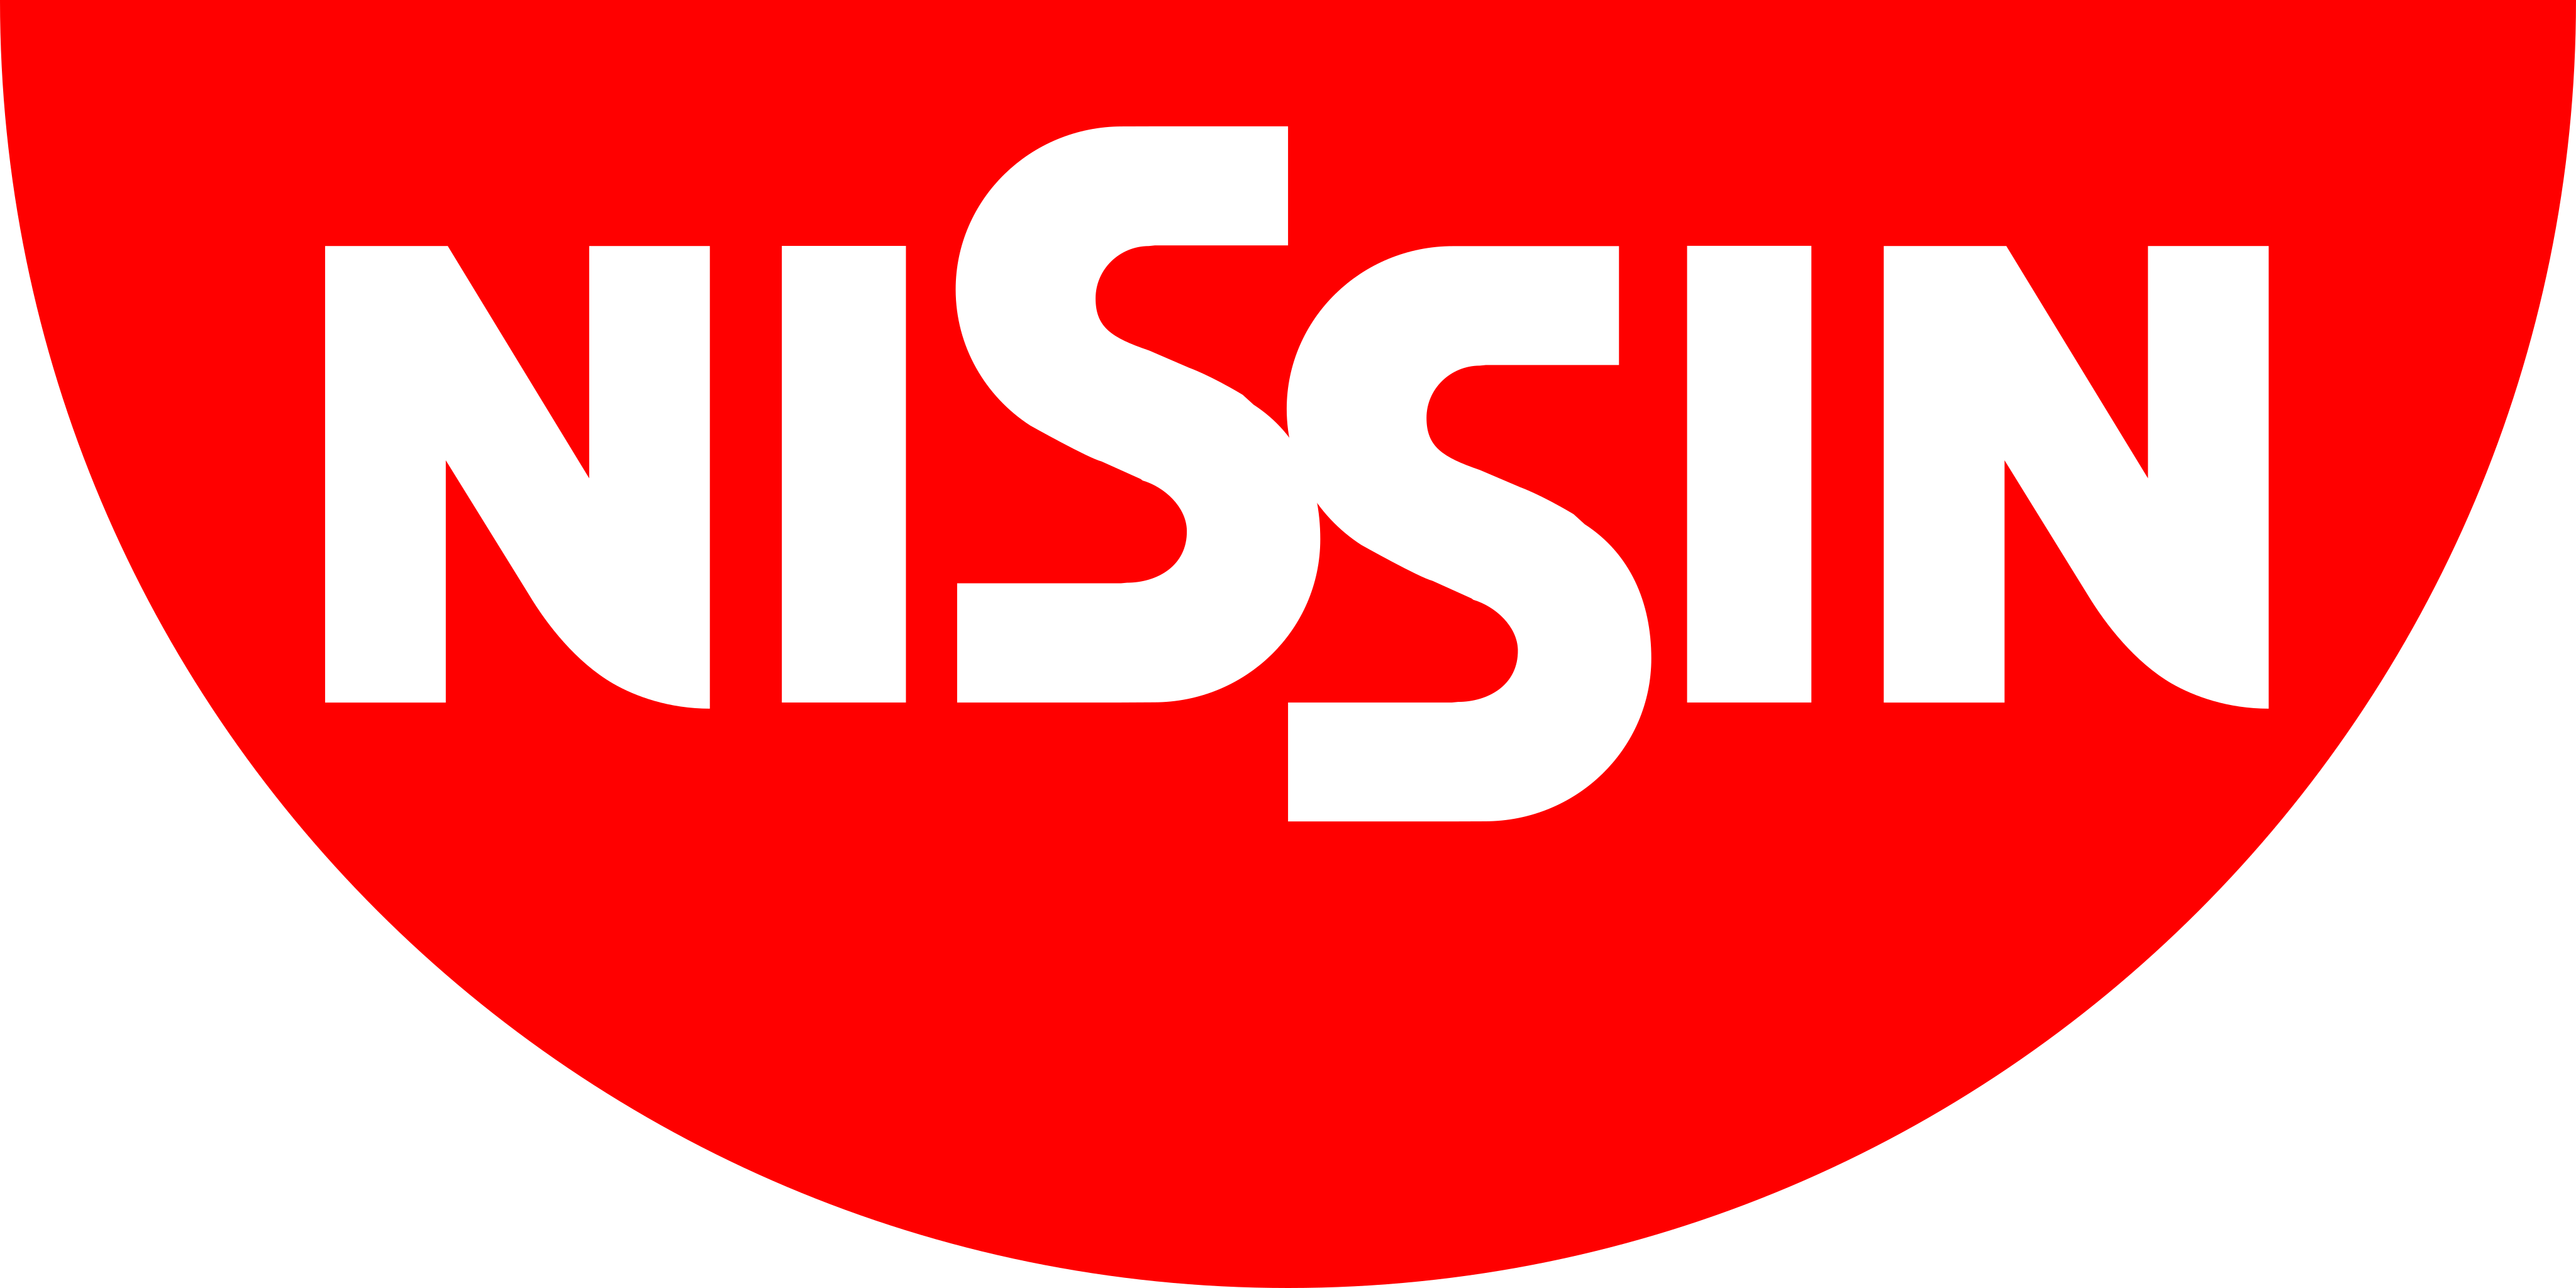 nissin logo 8 - Nissin Logo